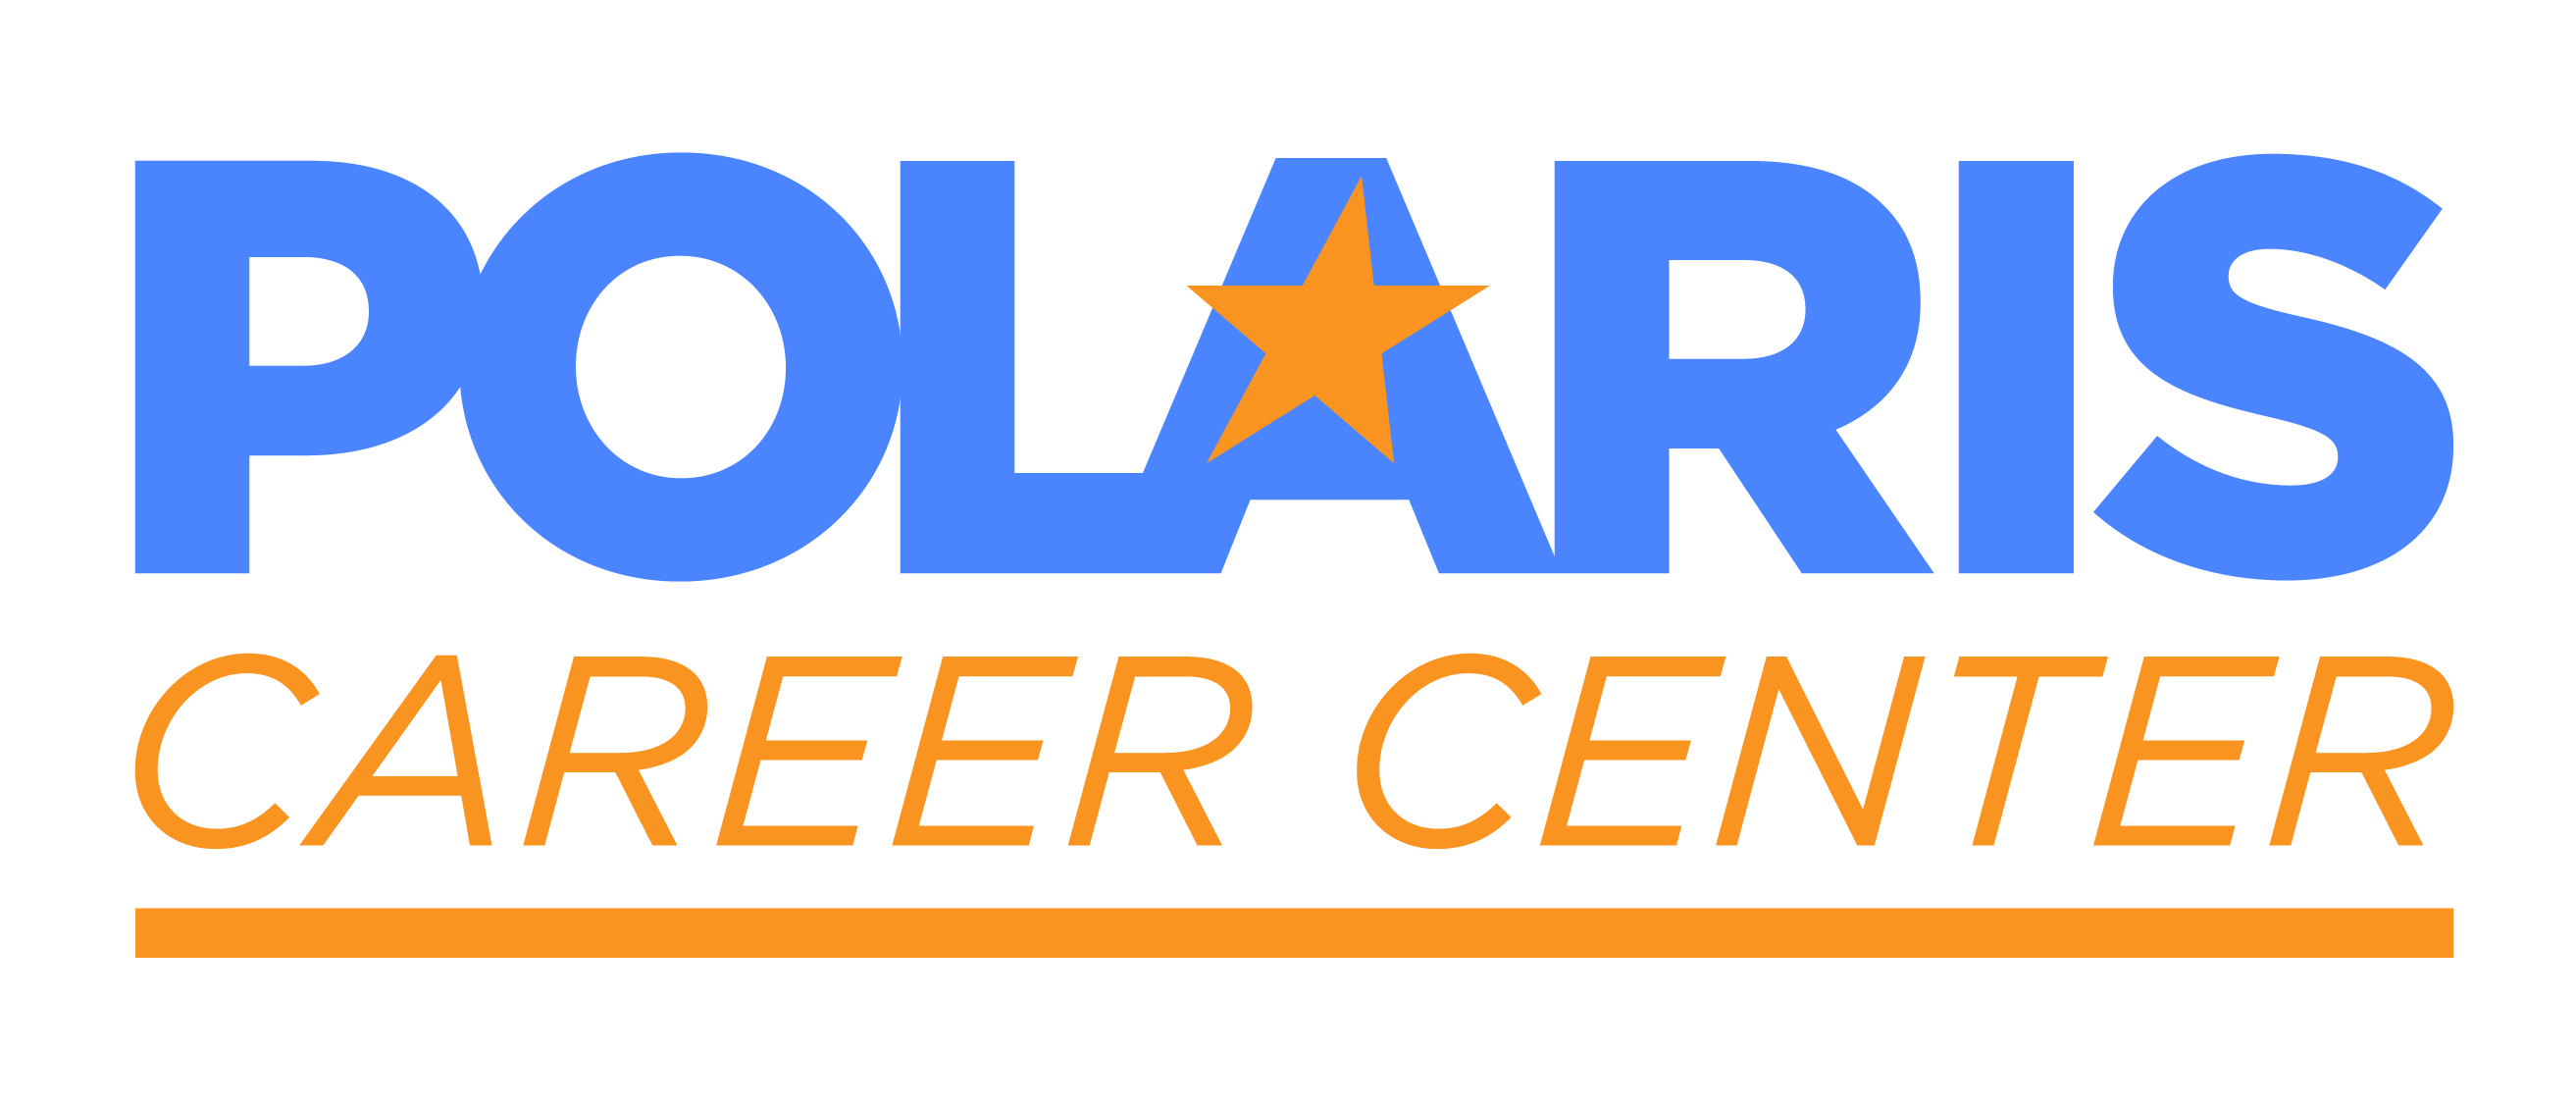 polaris career center colored logo white background